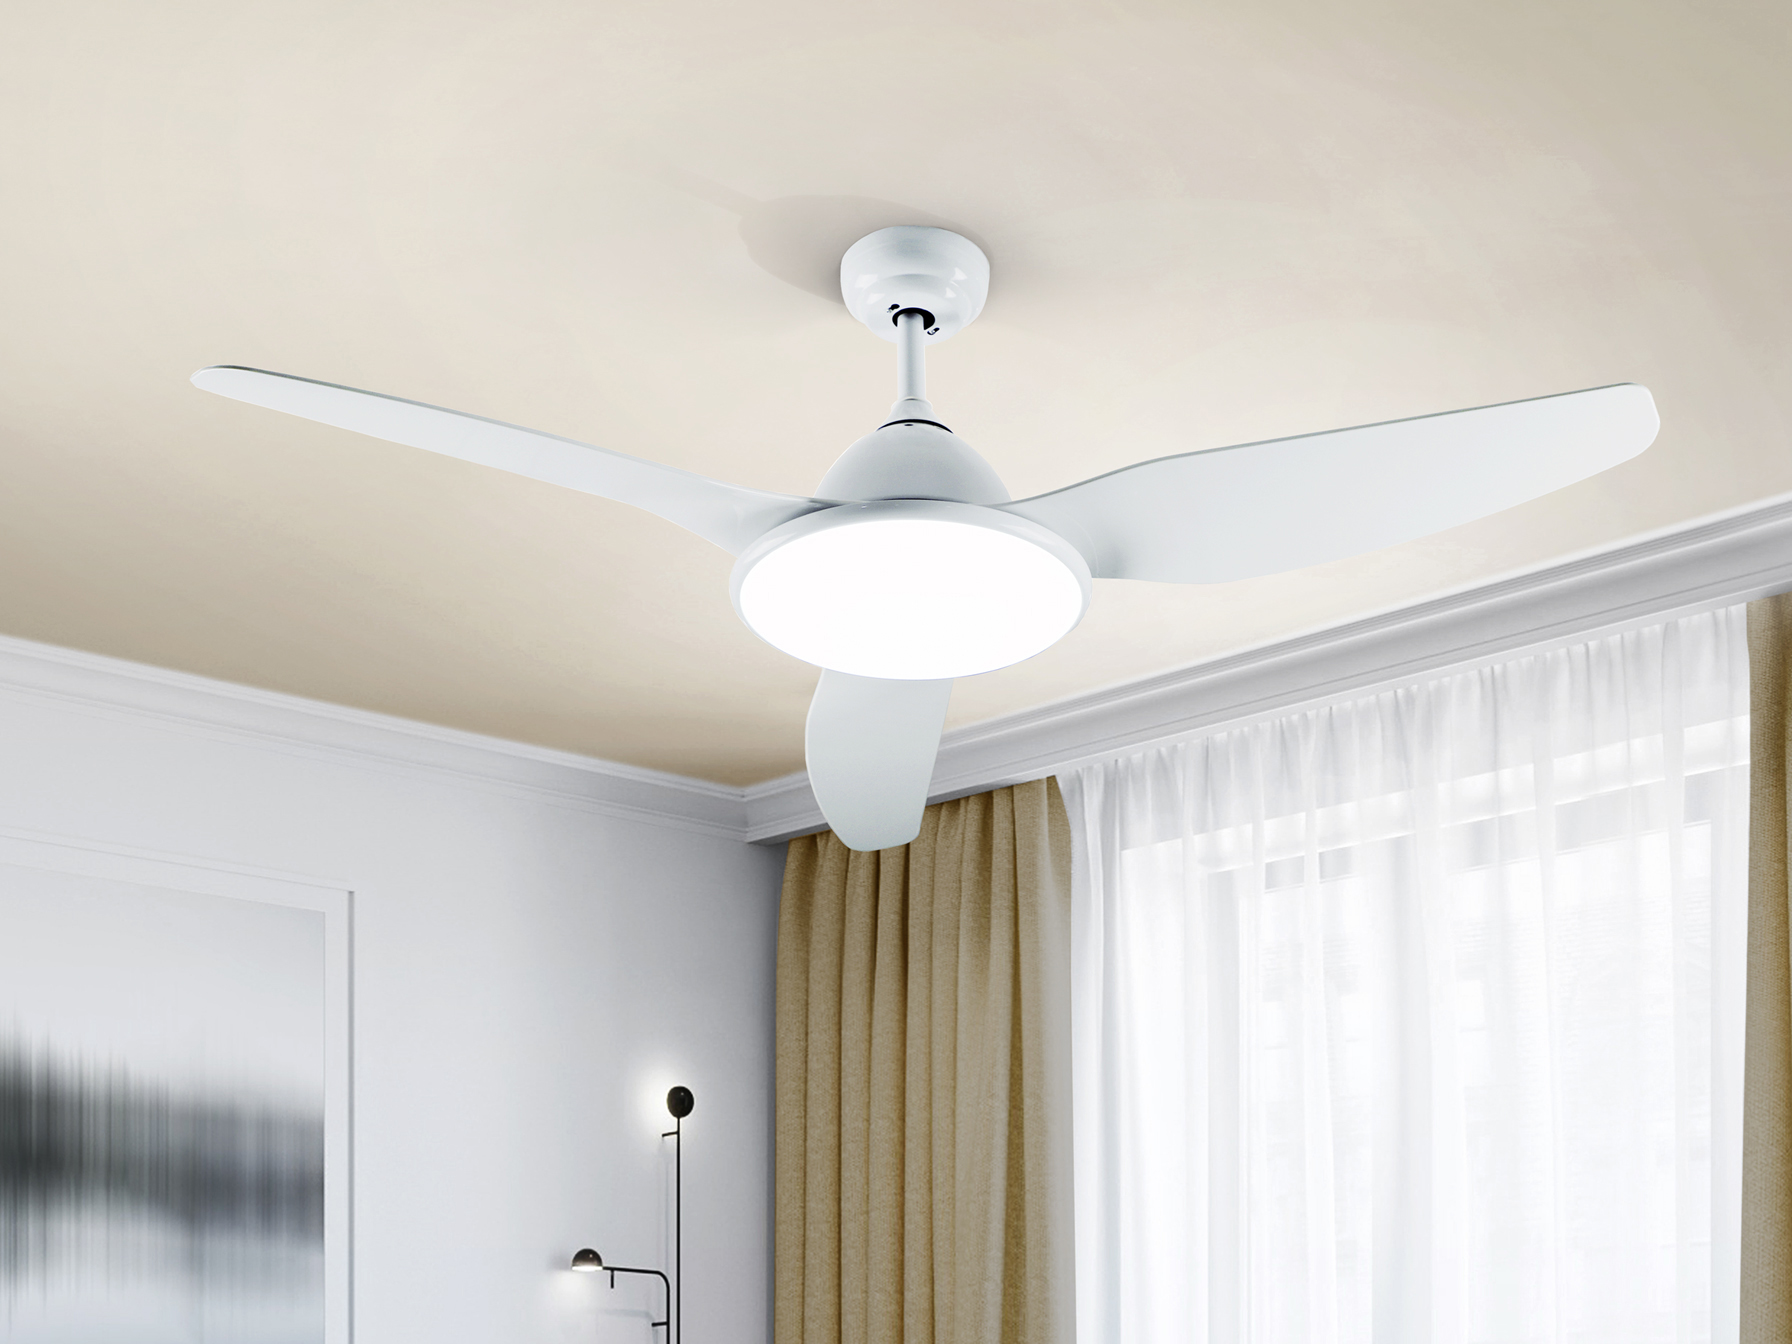 Olso 52 inch White LED Ceiling Fan